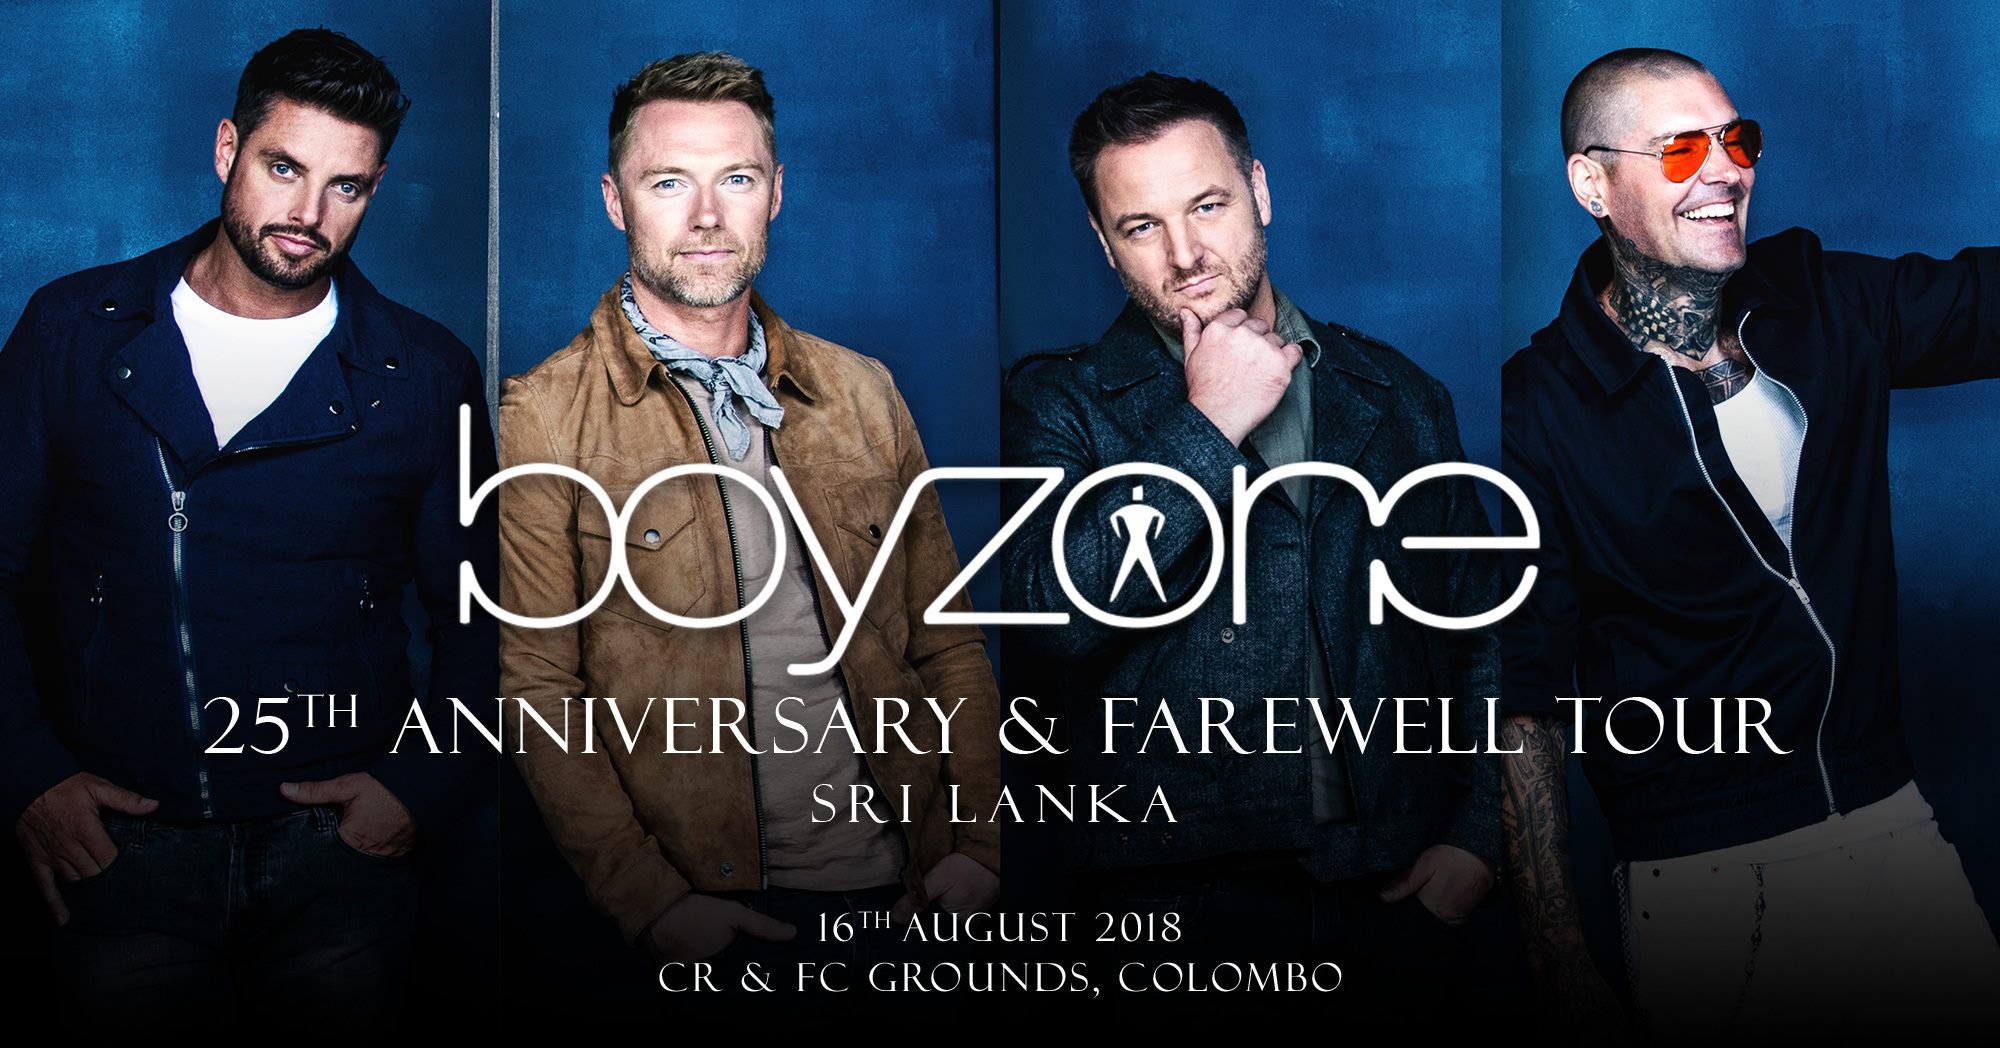 Boyzone 25th Anniversary & Farewell Tour Sri Lanka 2018